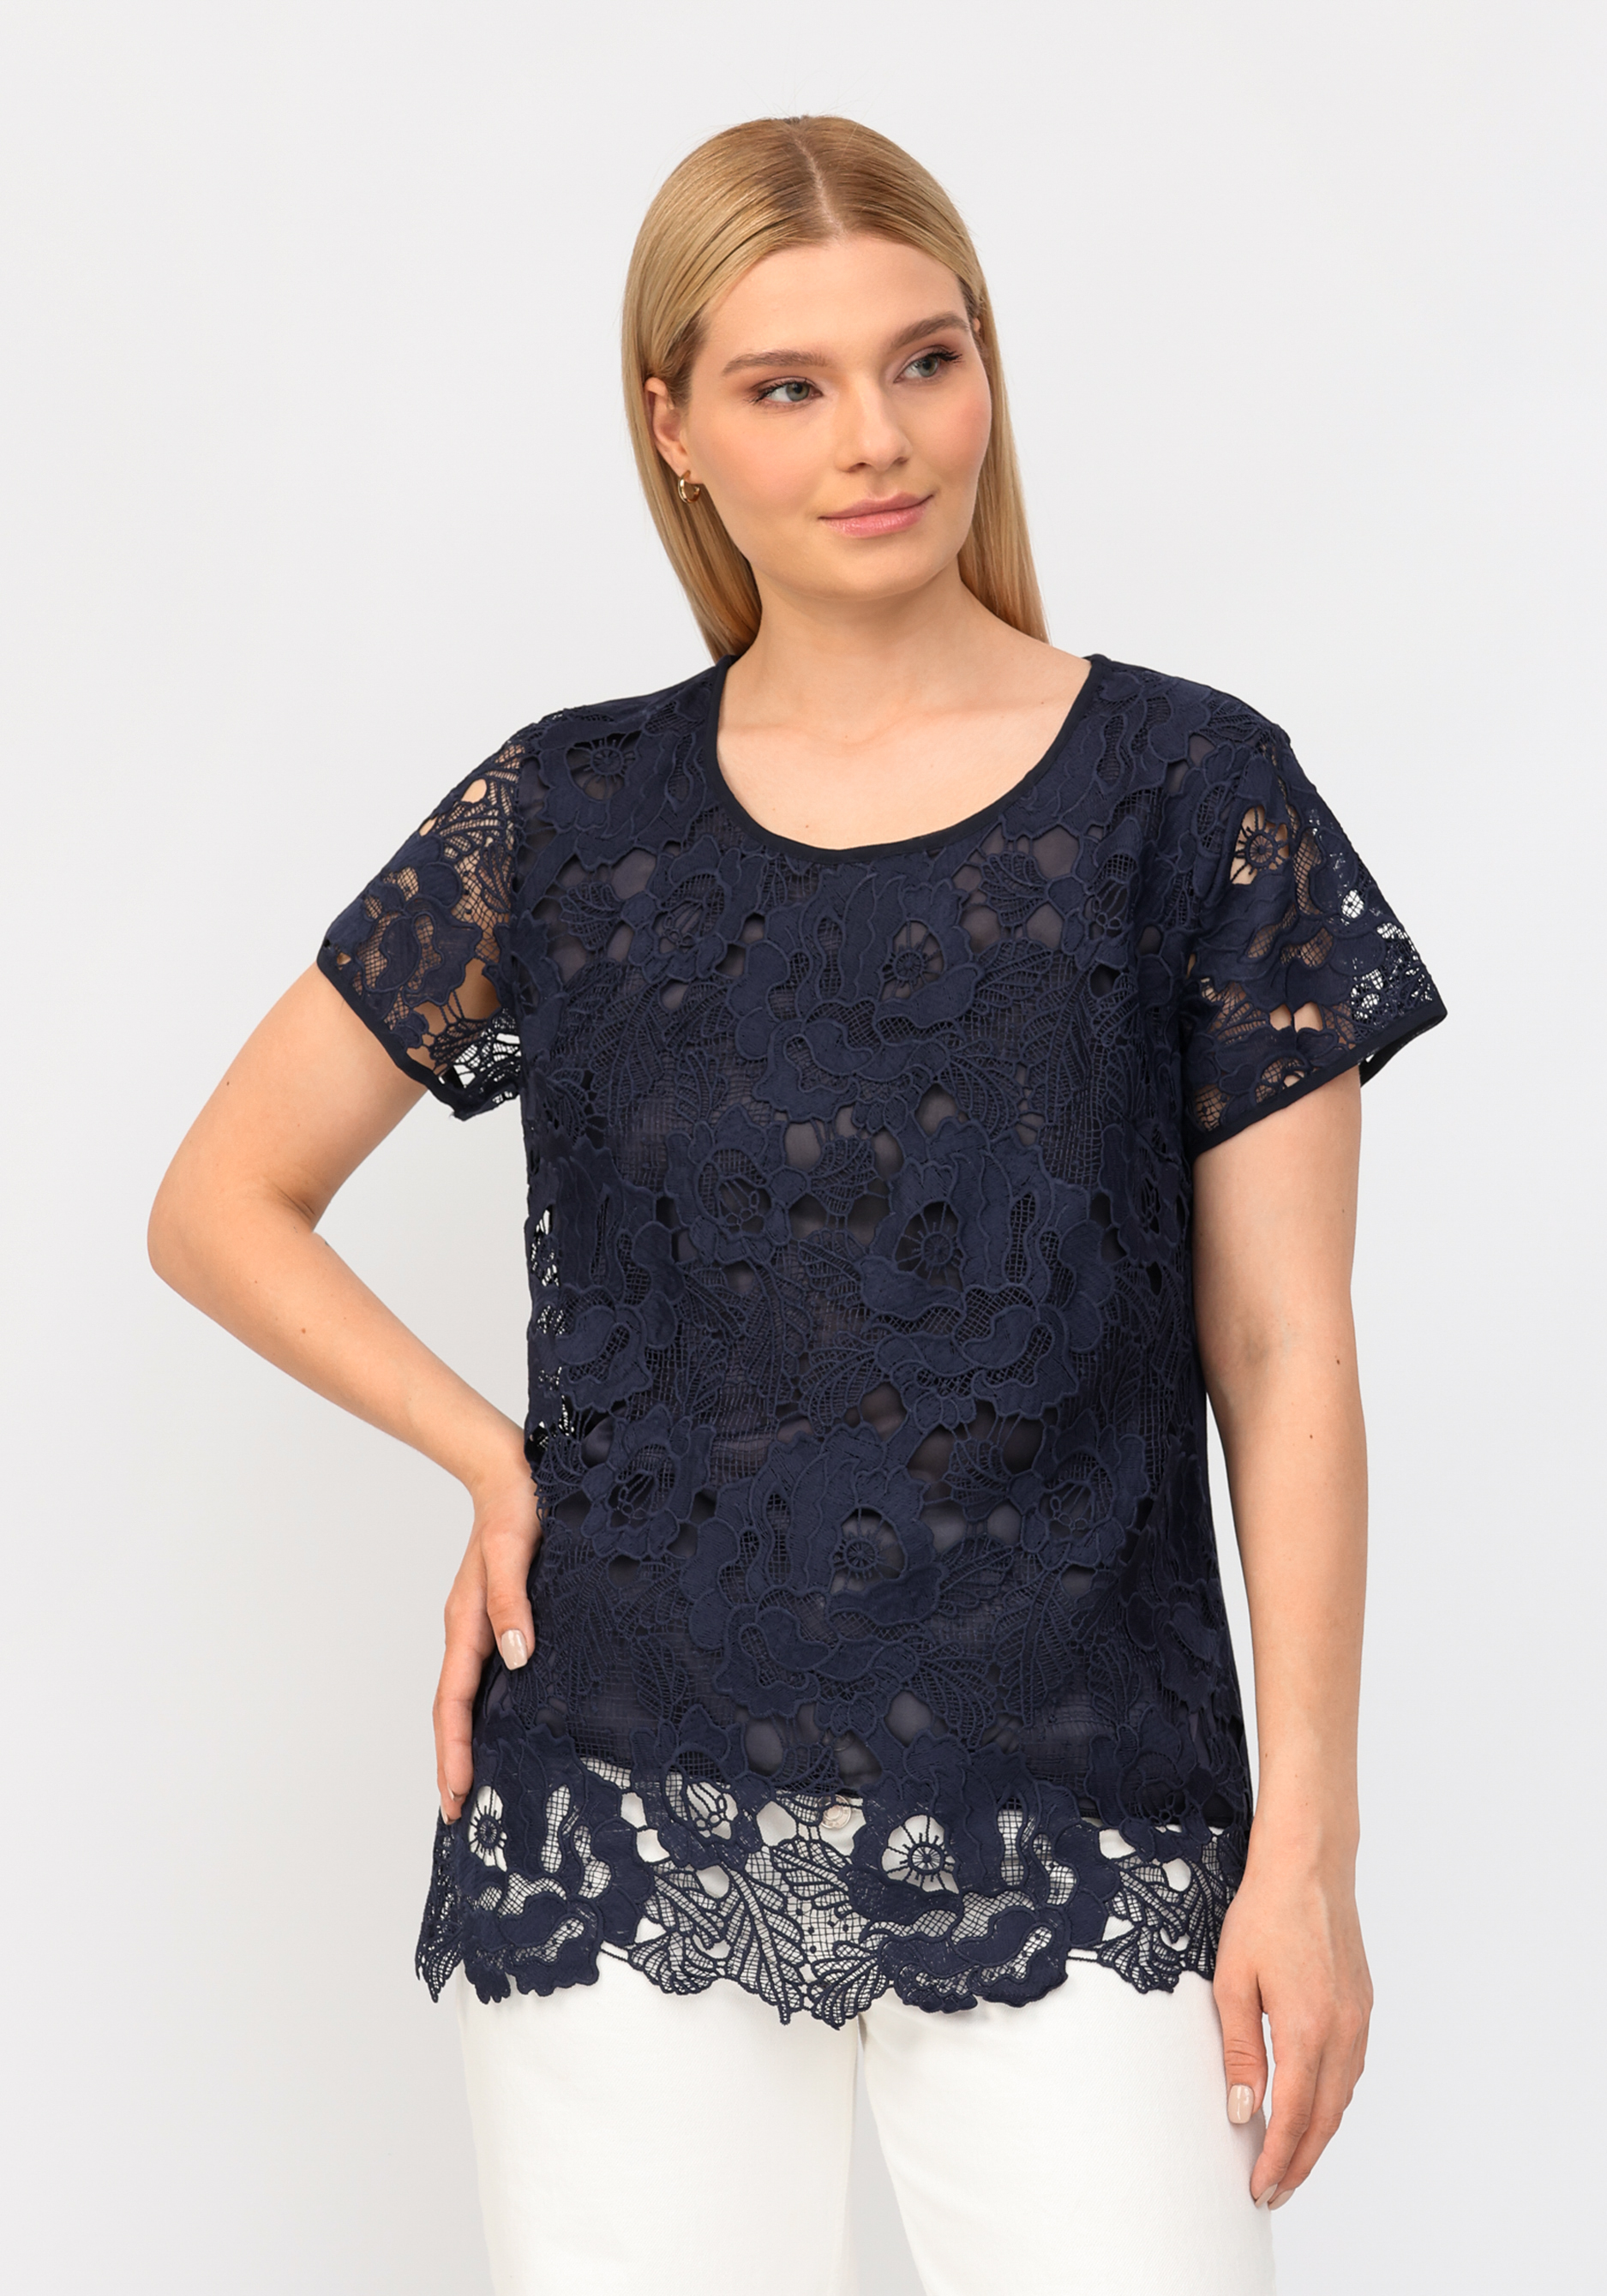 Блуза ажурная с коротким рукавом Лиана блуза kiabi с коротким рукавом 44 размер